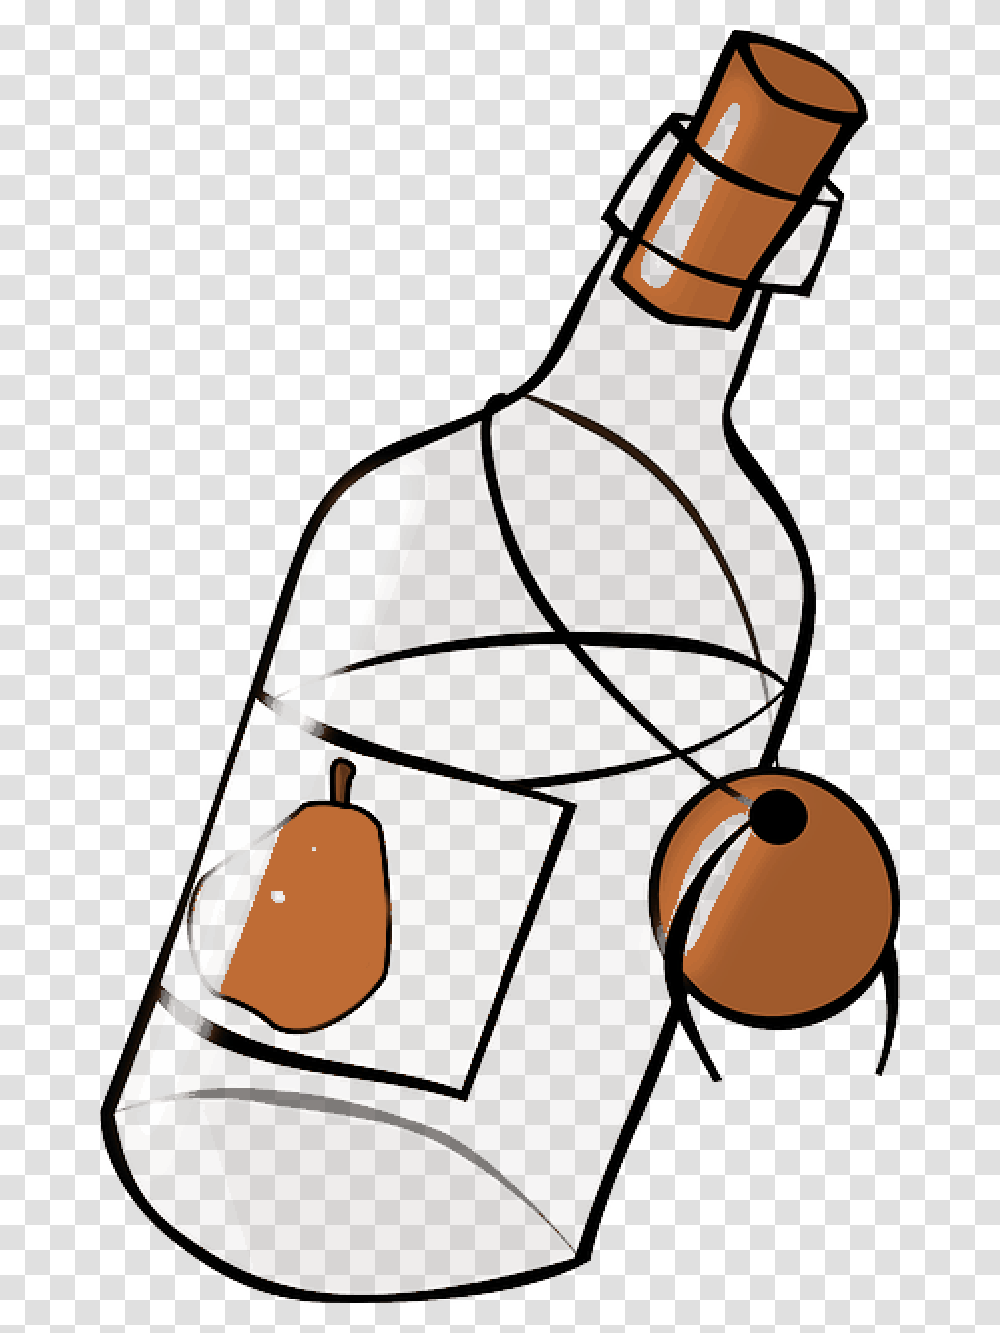 Moonshine Bottle Clipart Cartoon Light Message In A Bottle Clipart, Apparel, Beverage, Drink Transparent Png